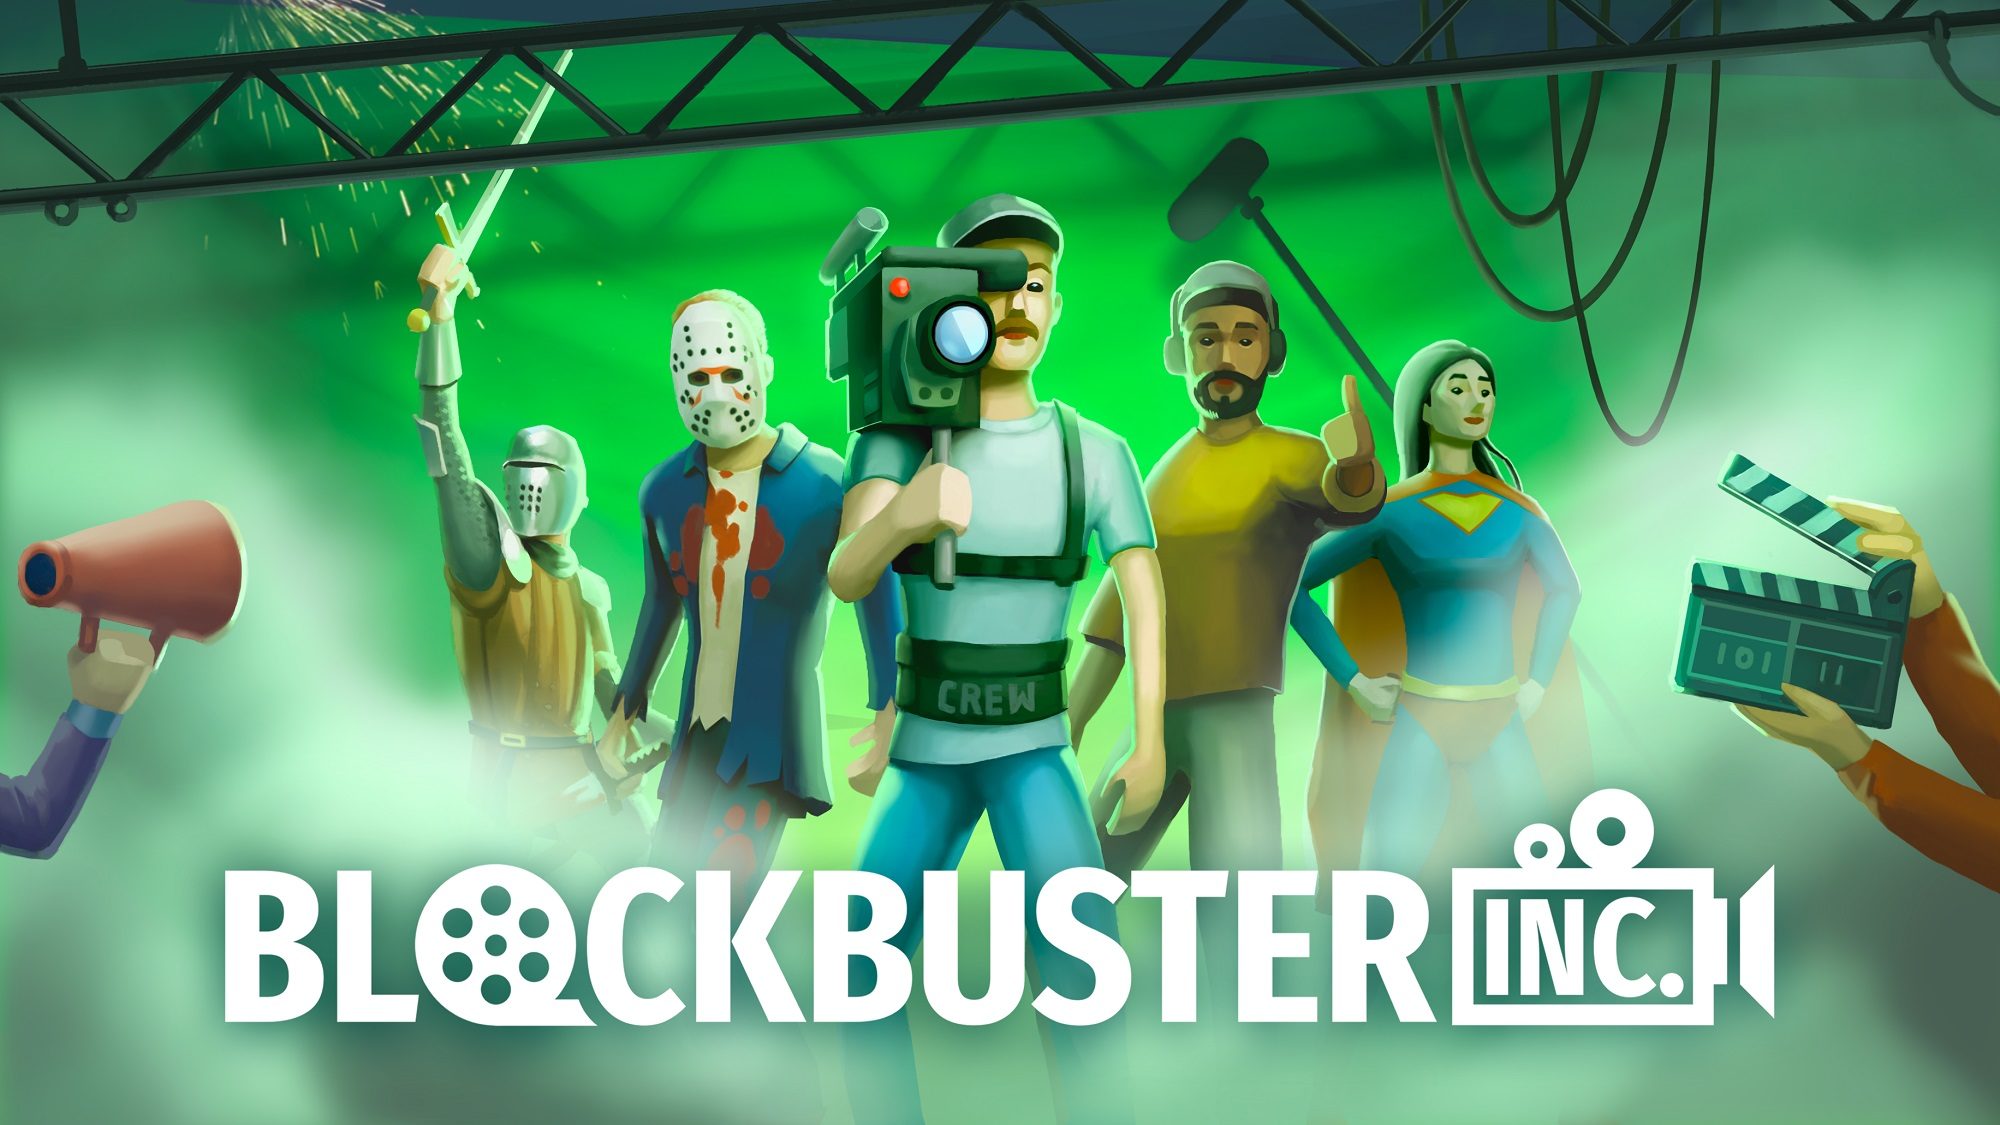 Movie Studio Management Sim ‘Blockbuster Inc.’ Drops This June